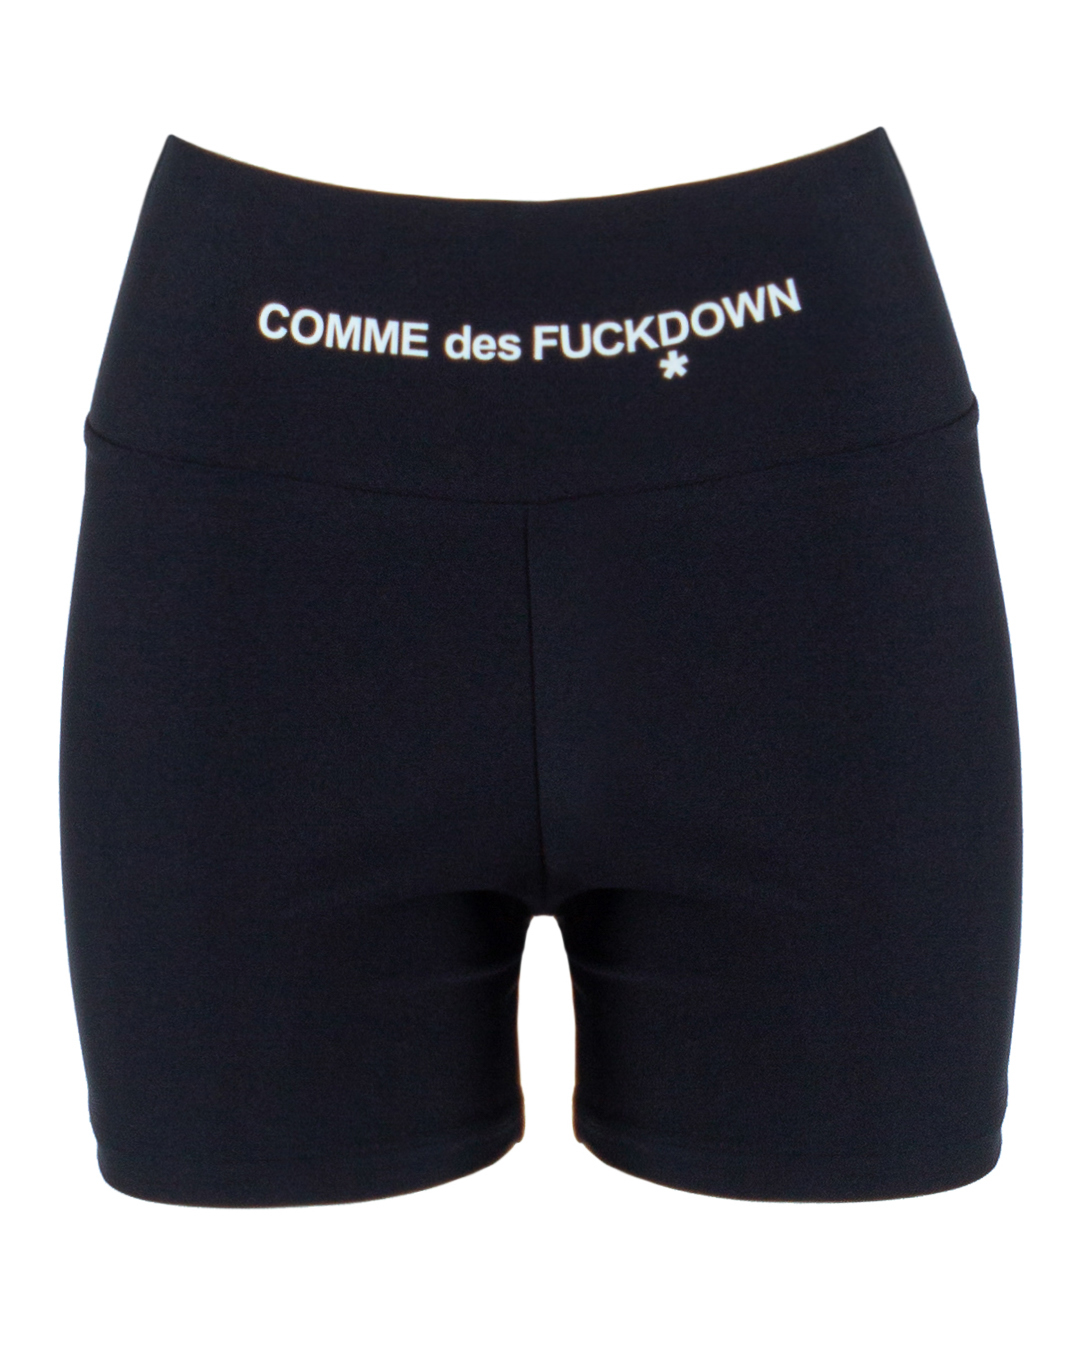 COMME des FUCKDOWN с брендированной линией пояса артикул  марки COMME des FUCKDOWN купить за 6400 руб.